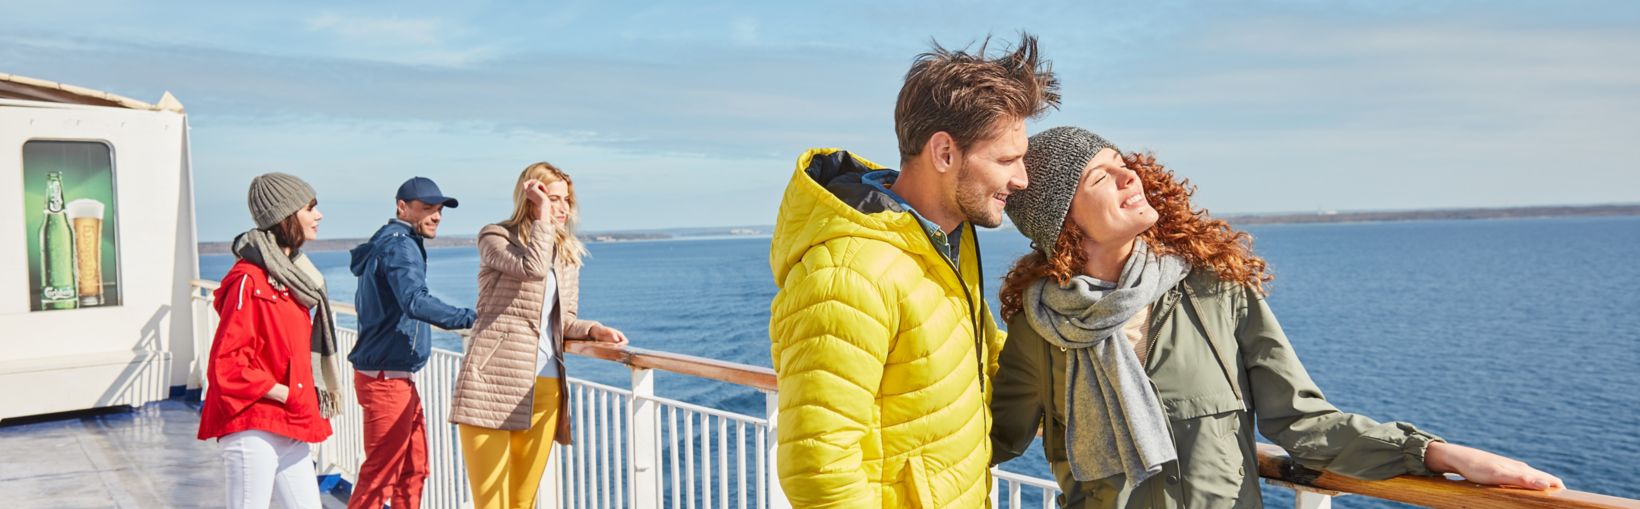 Couple on the ferry deck wind horizon coat